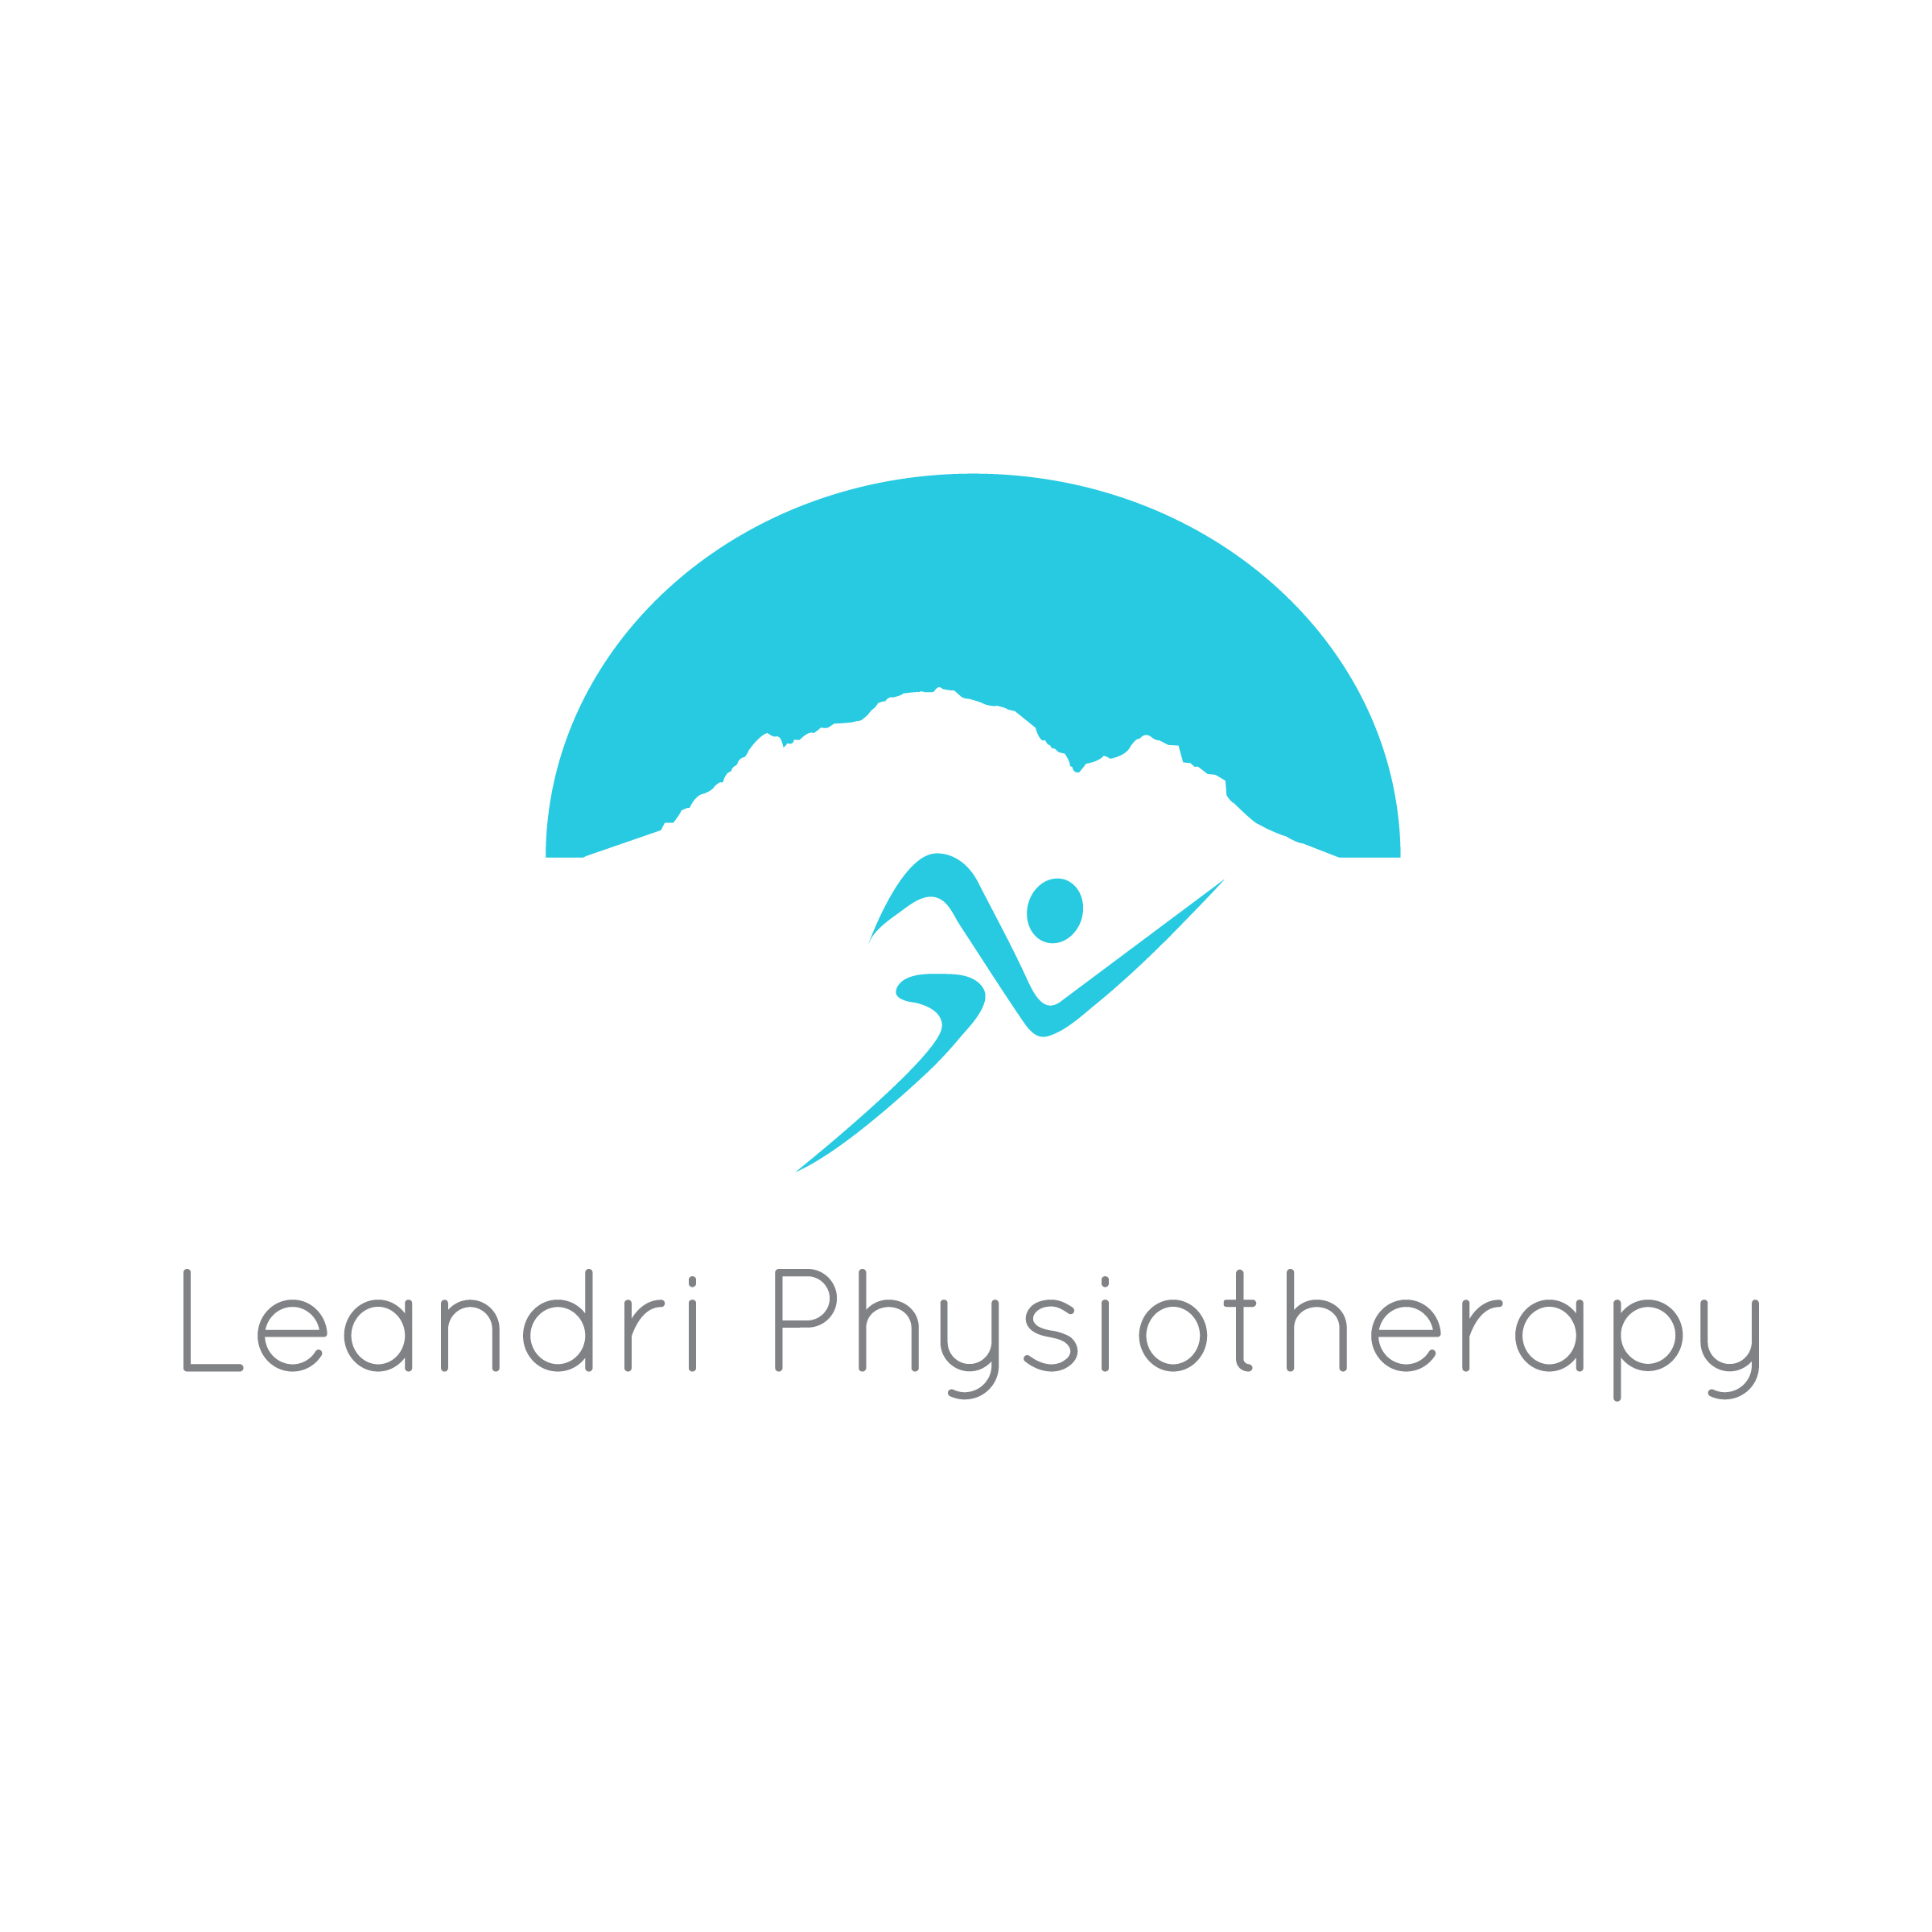 Leandri Physiotherapy logo